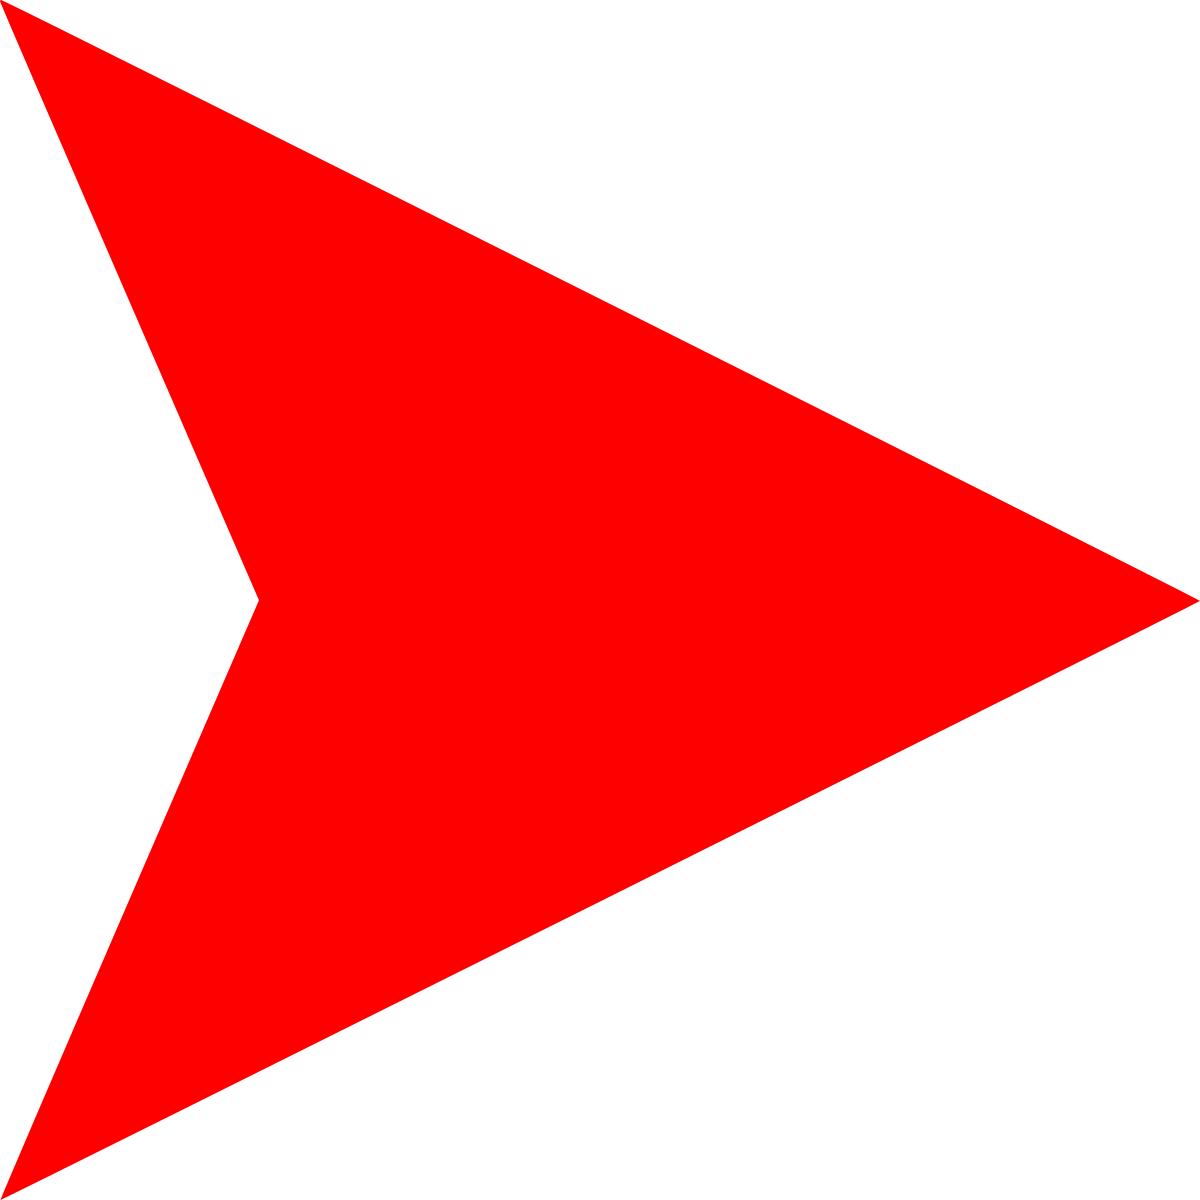 Red Arrows - Wikipedia